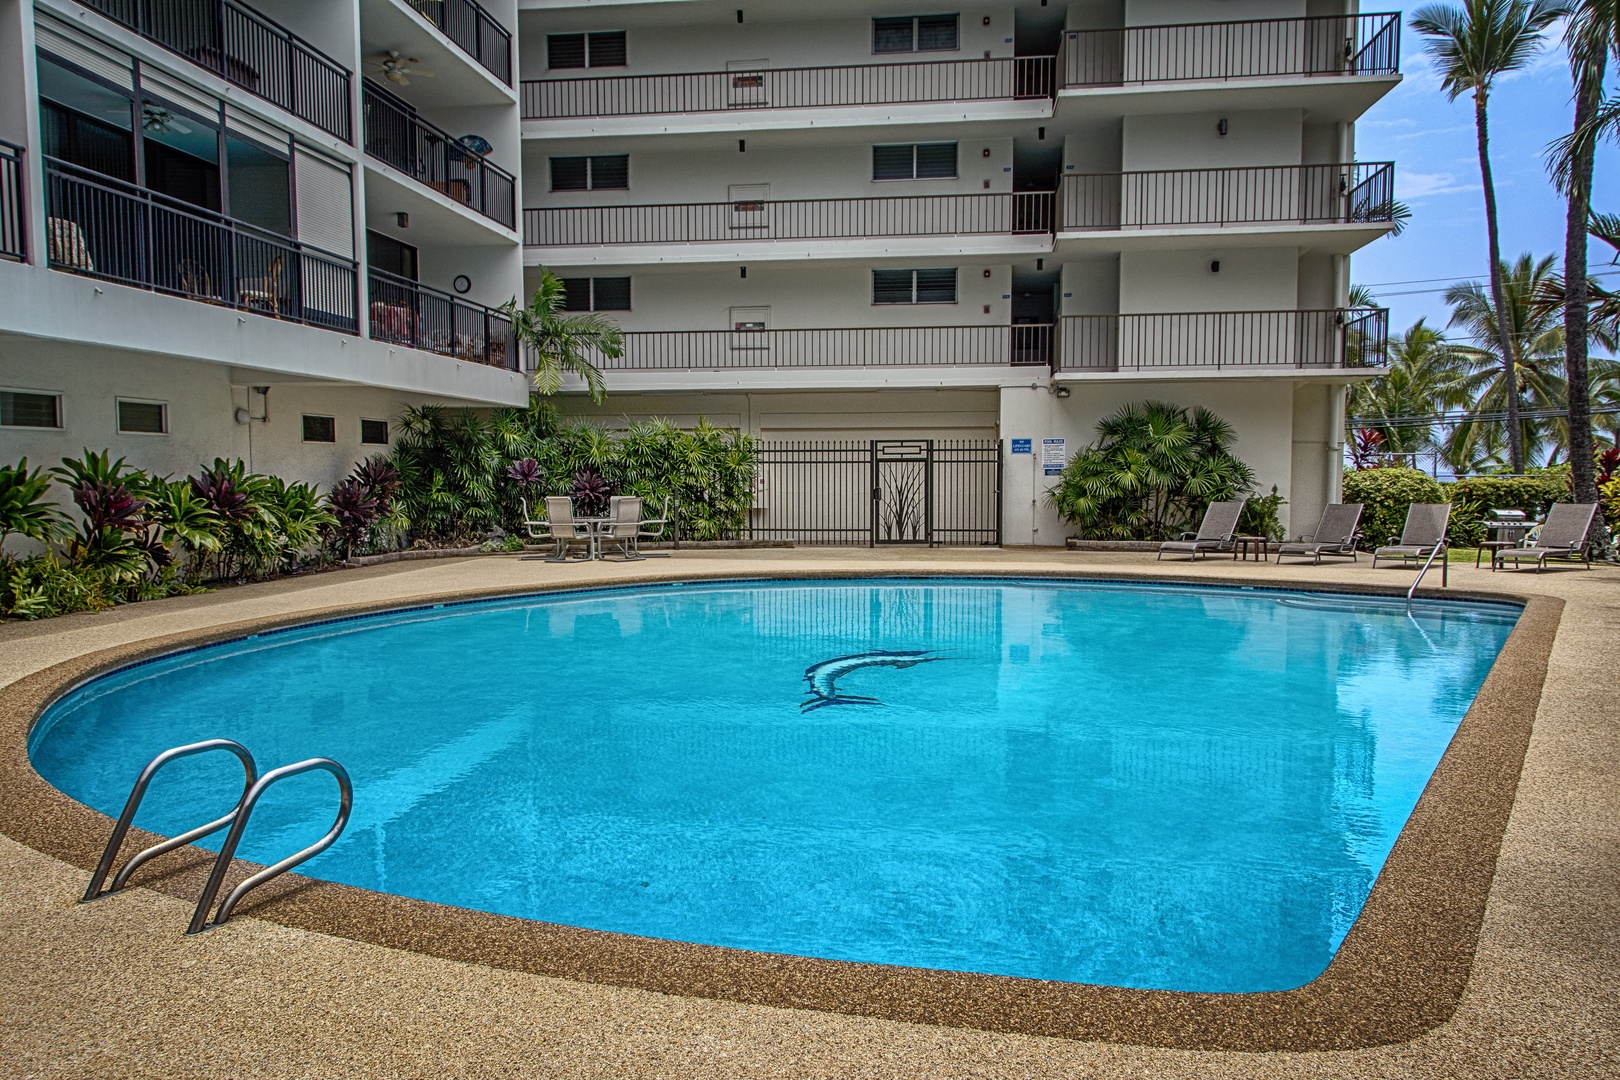 Kailua Kona Vacation Rentals, Kona Alii 304 - Large common area with pool & BBQs